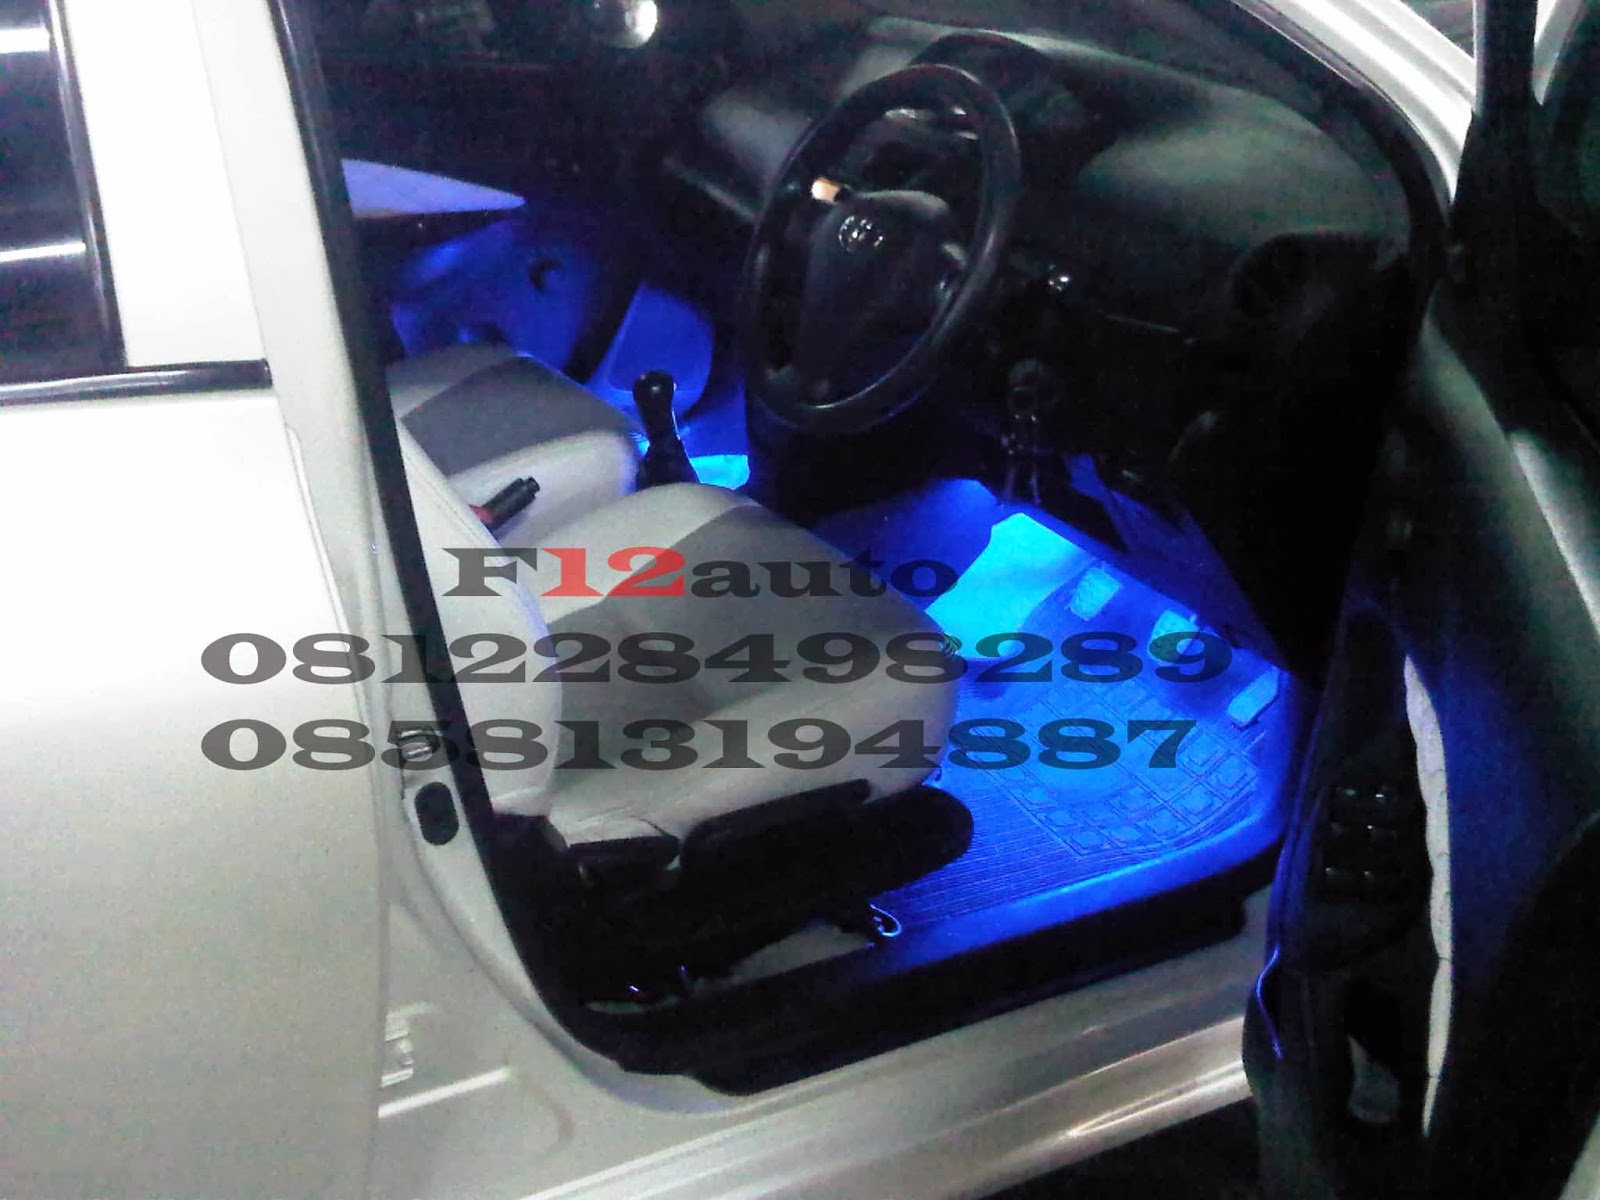 Koleksi Modifikasi Interior Mobil Bandung Terbaru Modifotto